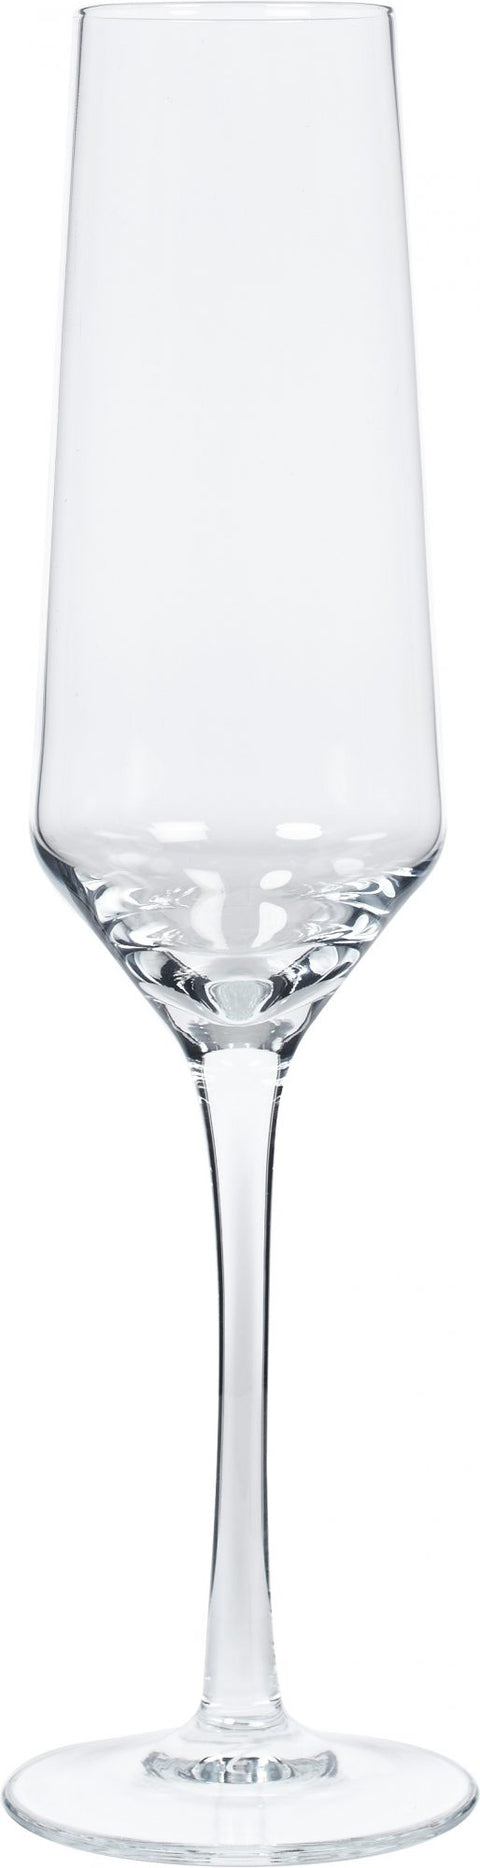 Neptune Hoxton Champagne Glass